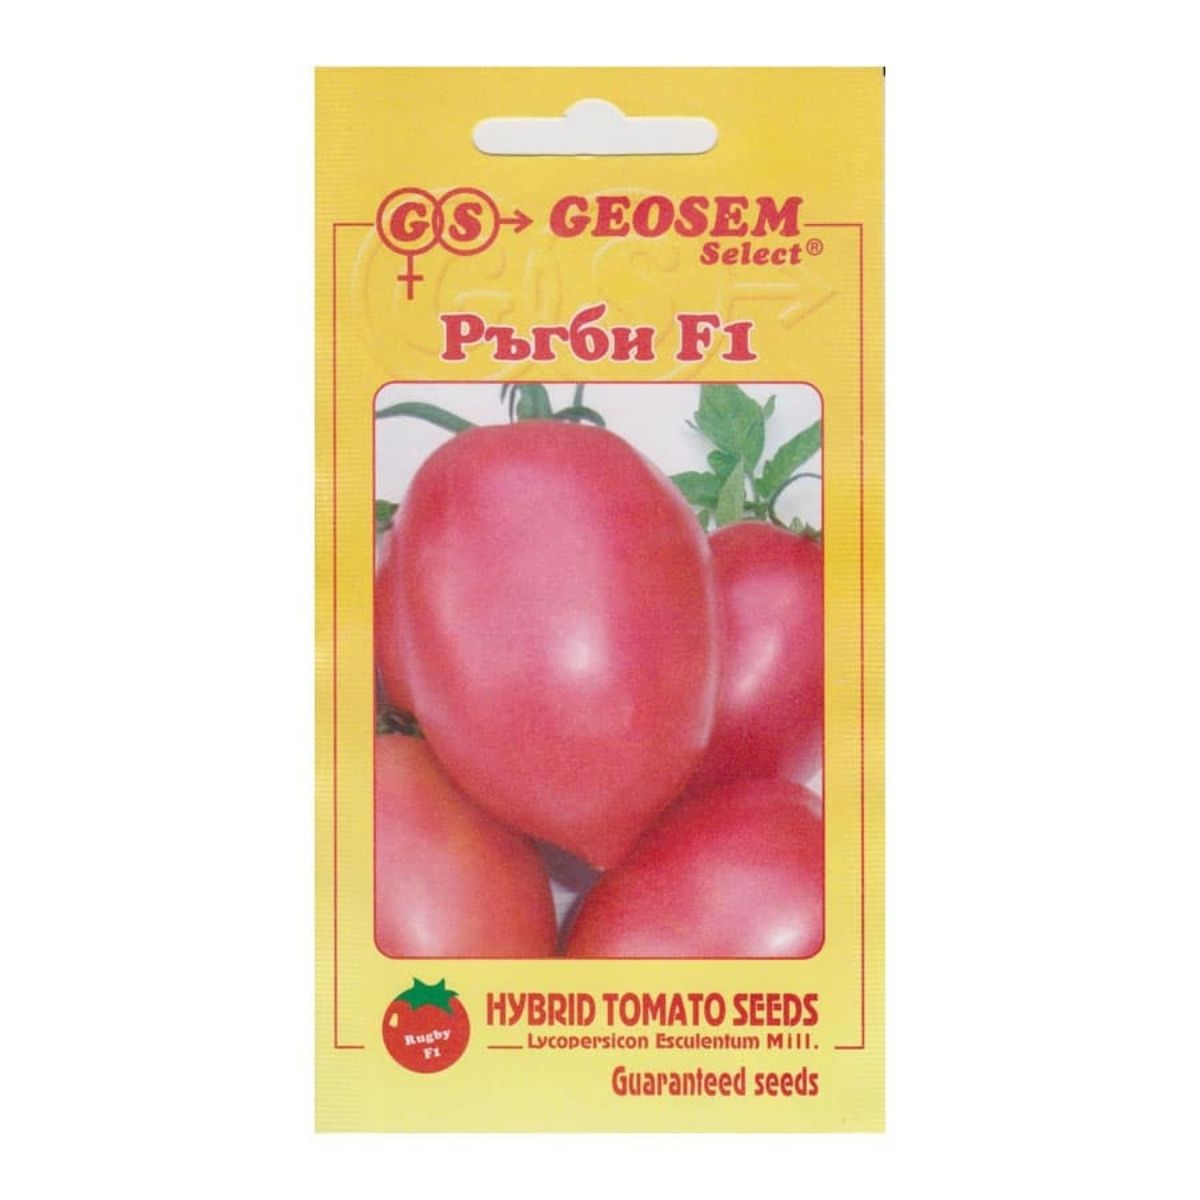 Tomate - Seminte Tomate semi-timpurii RUGBY GeosemSelect 1000 sem, hectarul.ro